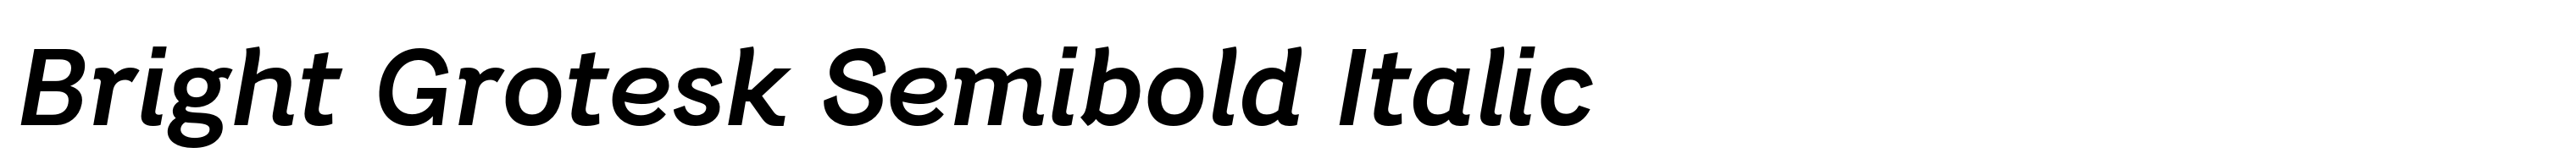 Bright Grotesk Semibold Italic